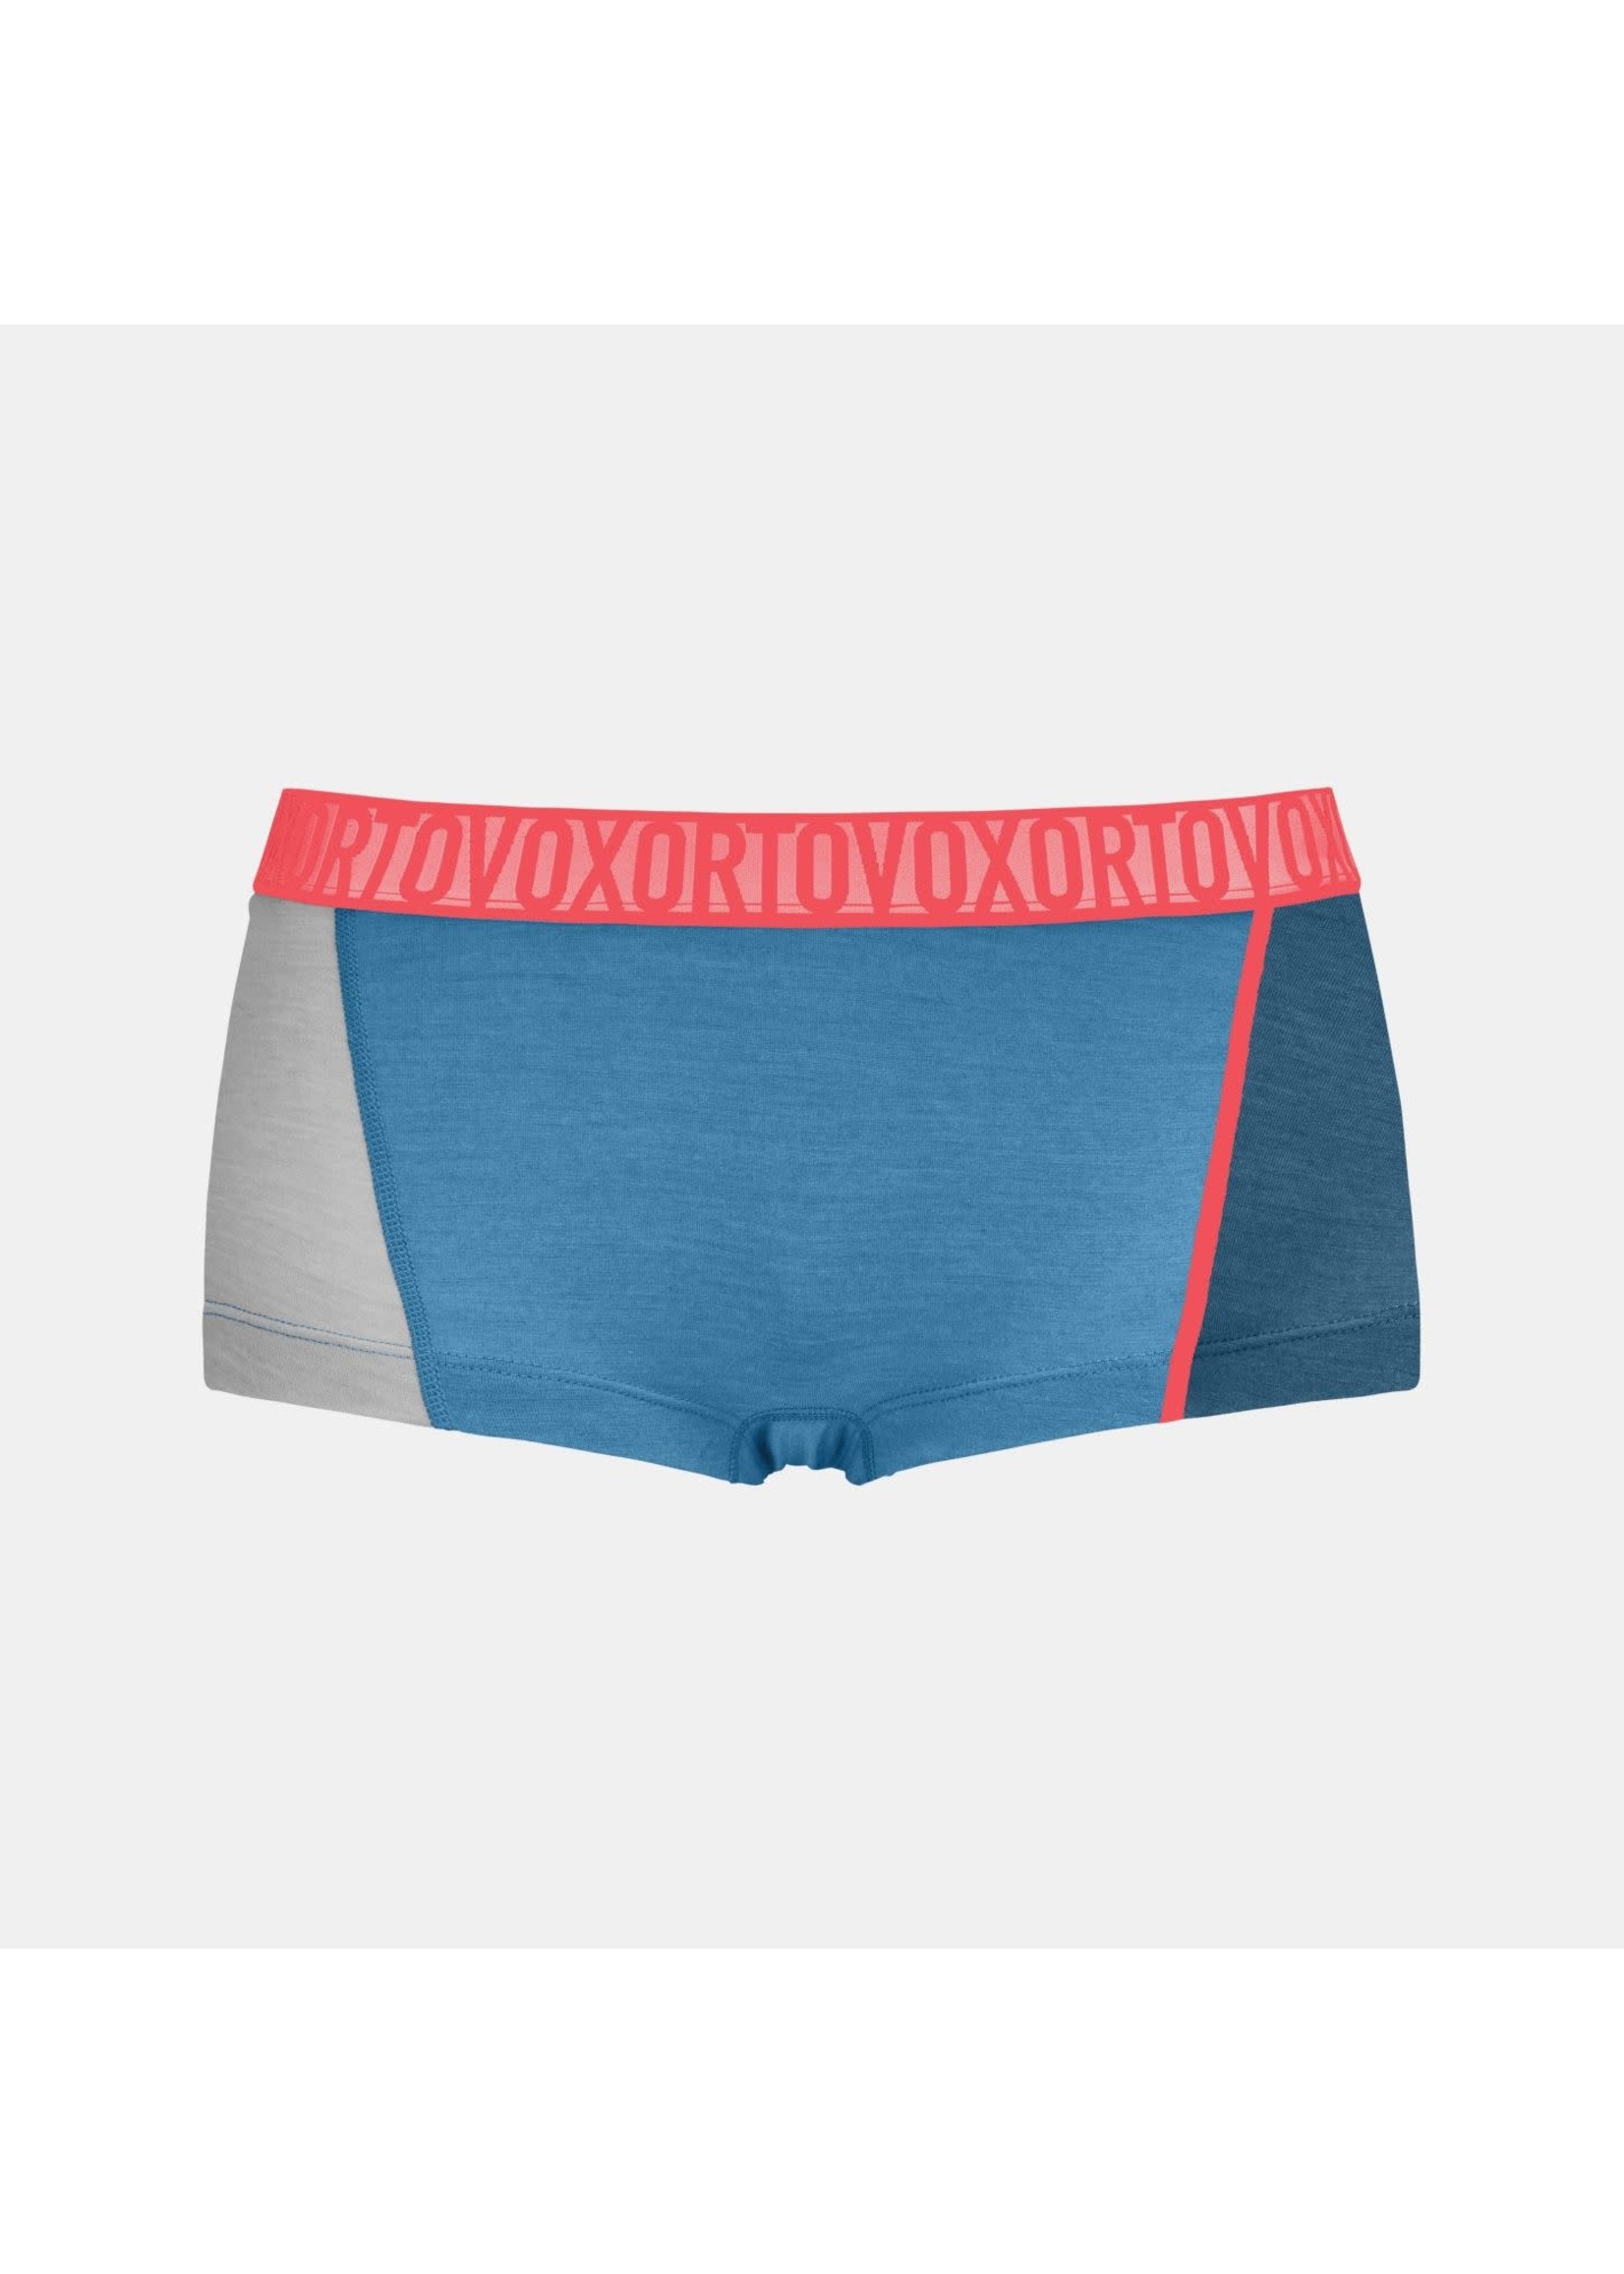 Ortovox Ortovox 150 Essential Hot Pants - Women